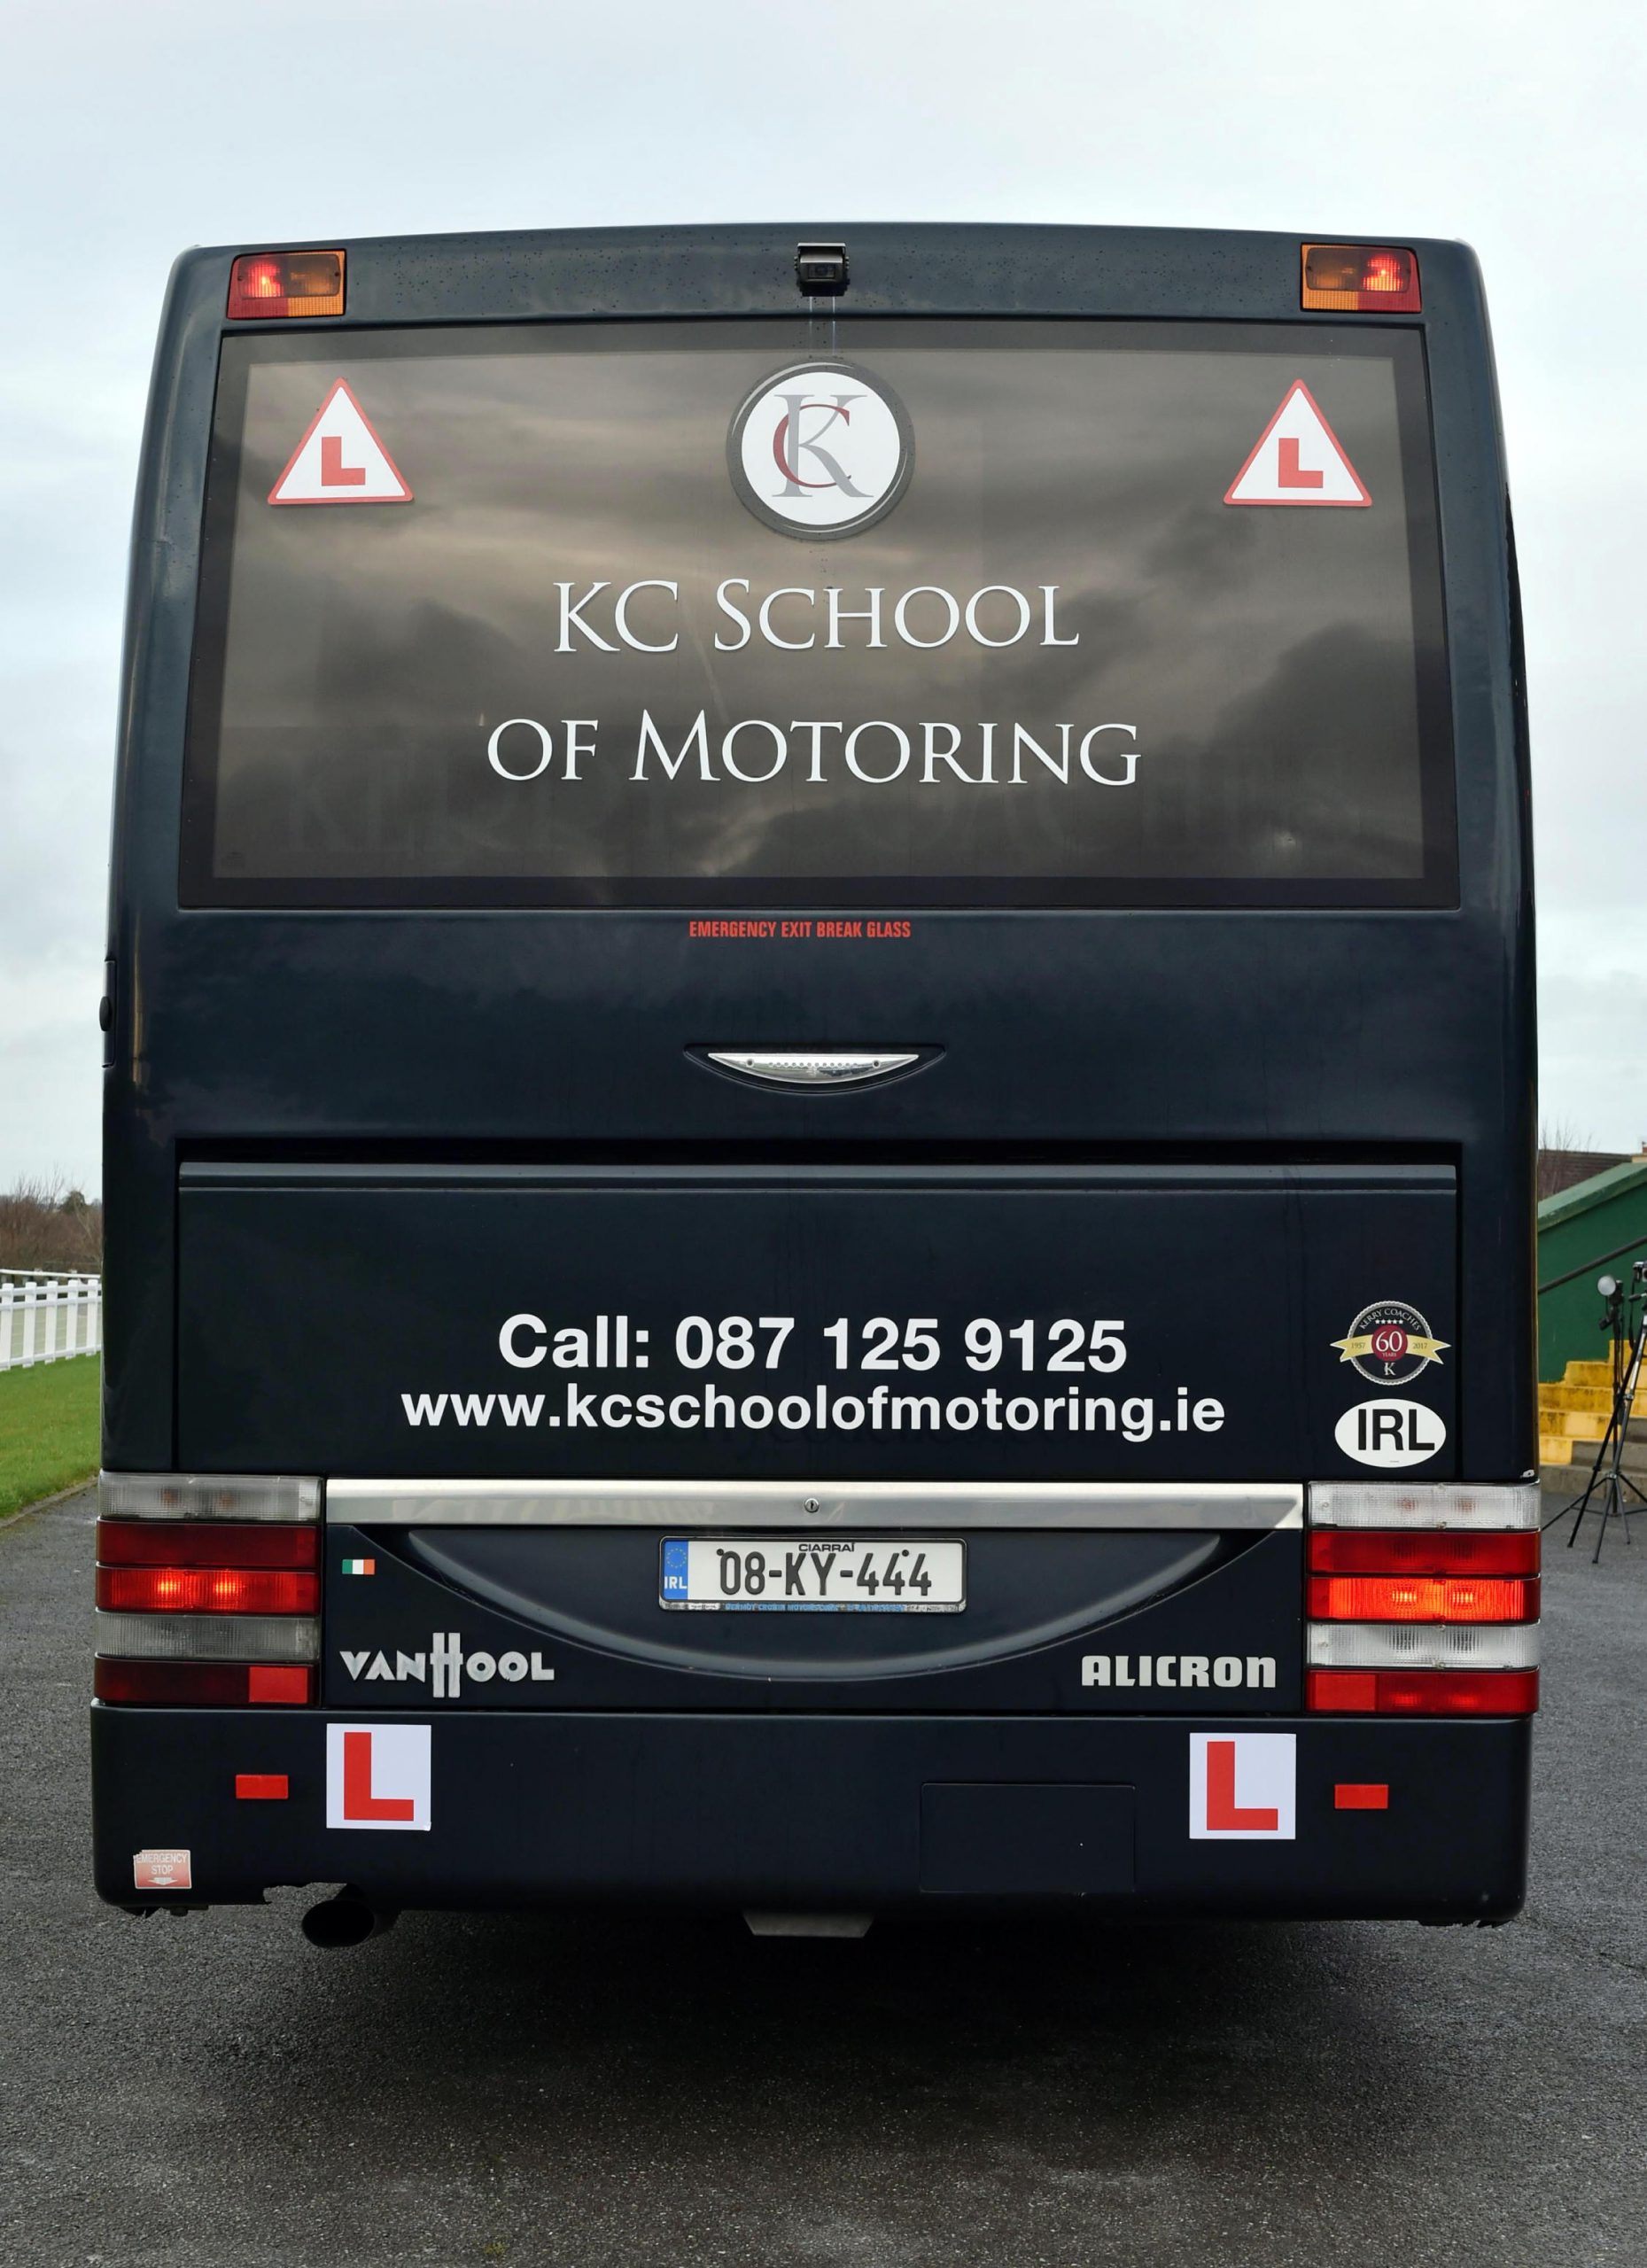 Kerry Coaches School of Motoring in Killarney, County Kerry.
Photo: Don MacMonagle